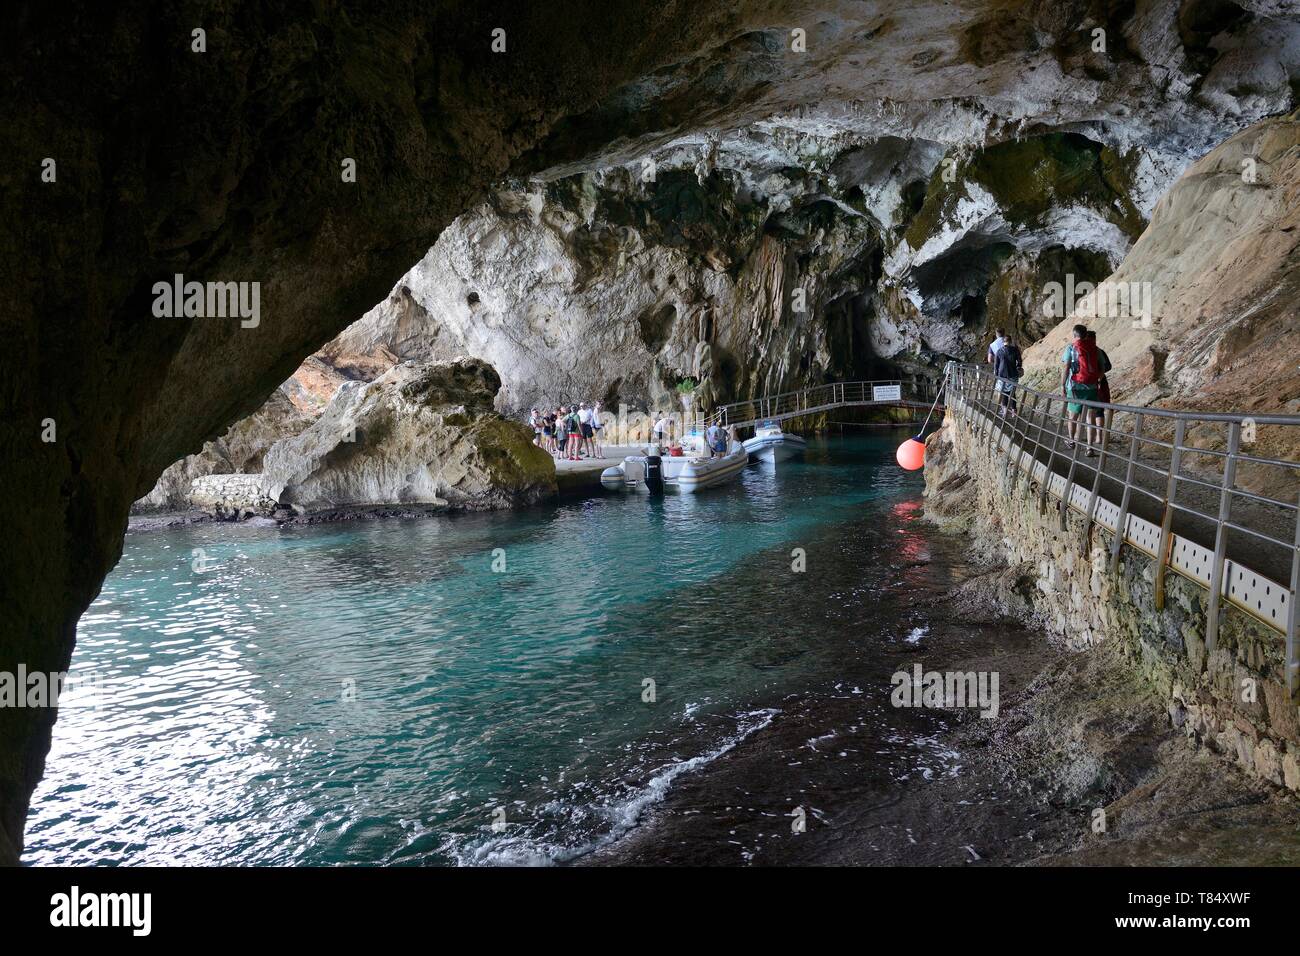 Tourists approaching the entrance to Grotta del Bue Marino limestone caves complex, Gulf of Orosei, Gennargentu National Park, Cala Gonone, Sardinia. Stock Photo